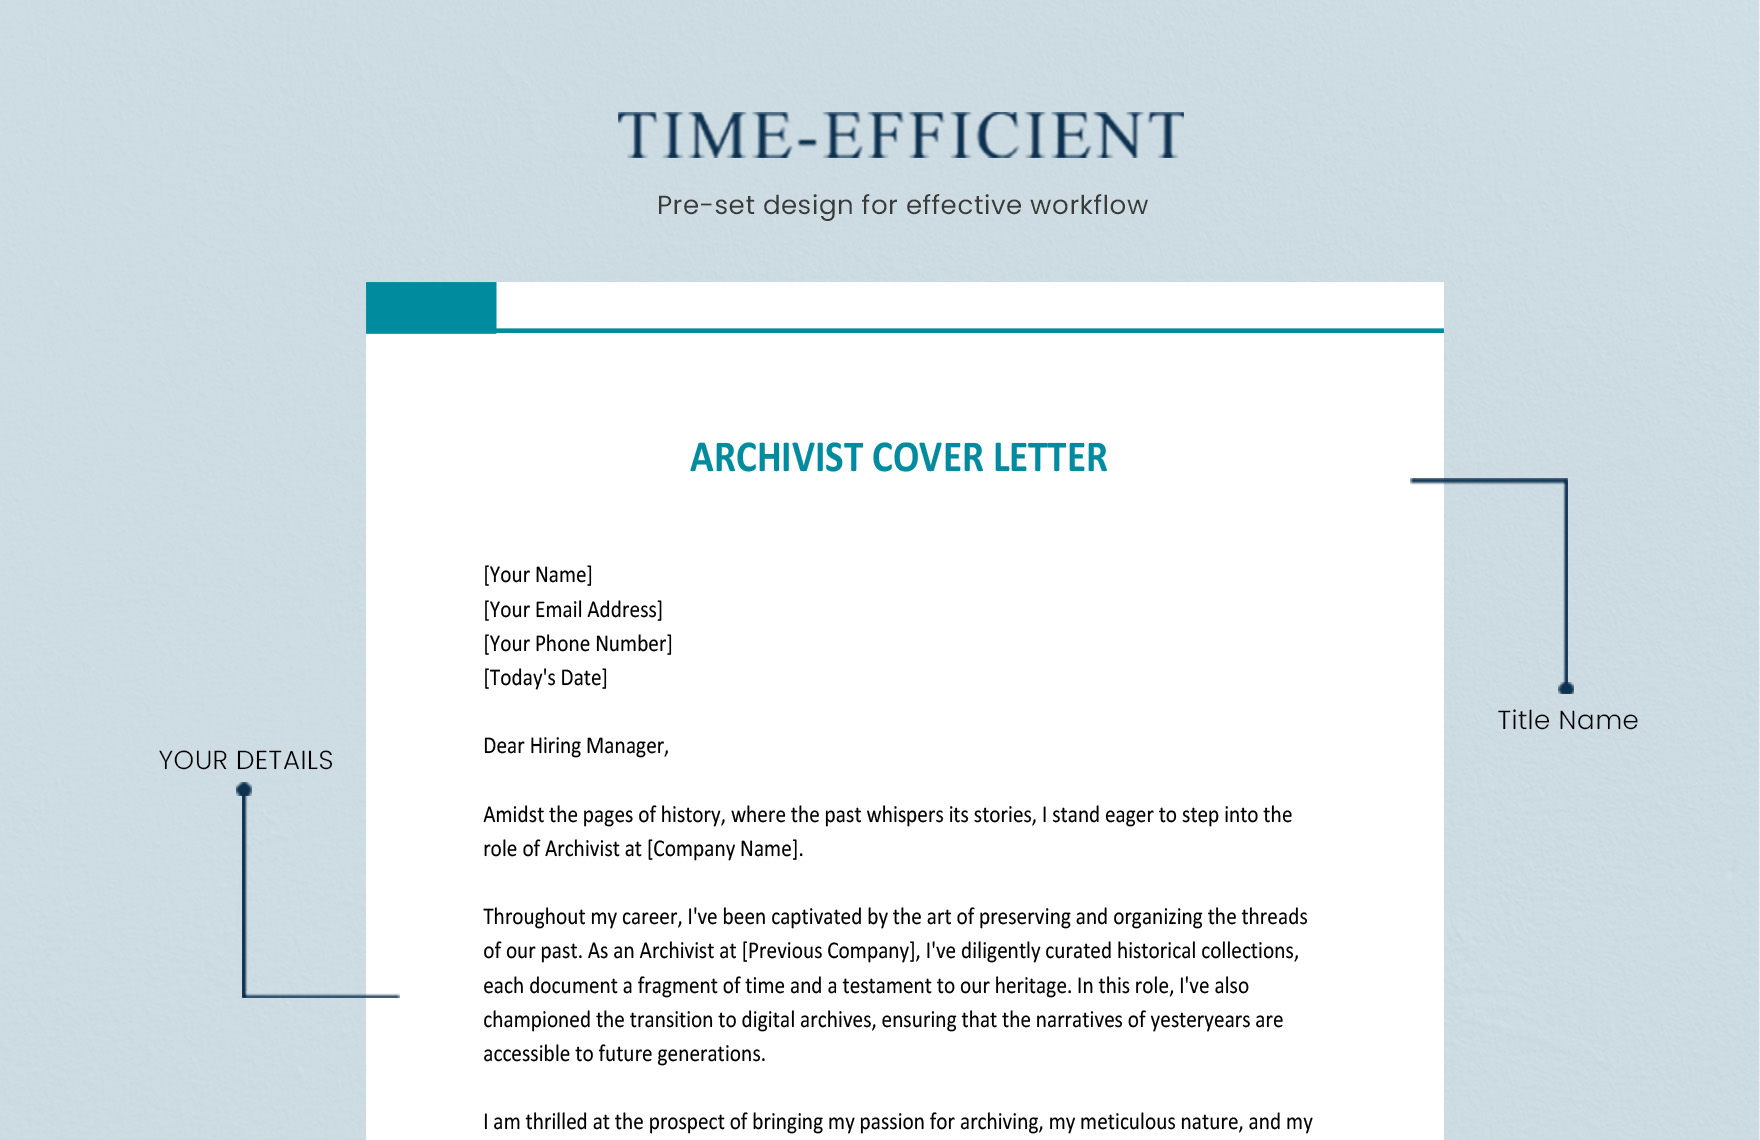 Archivist Cover Letter